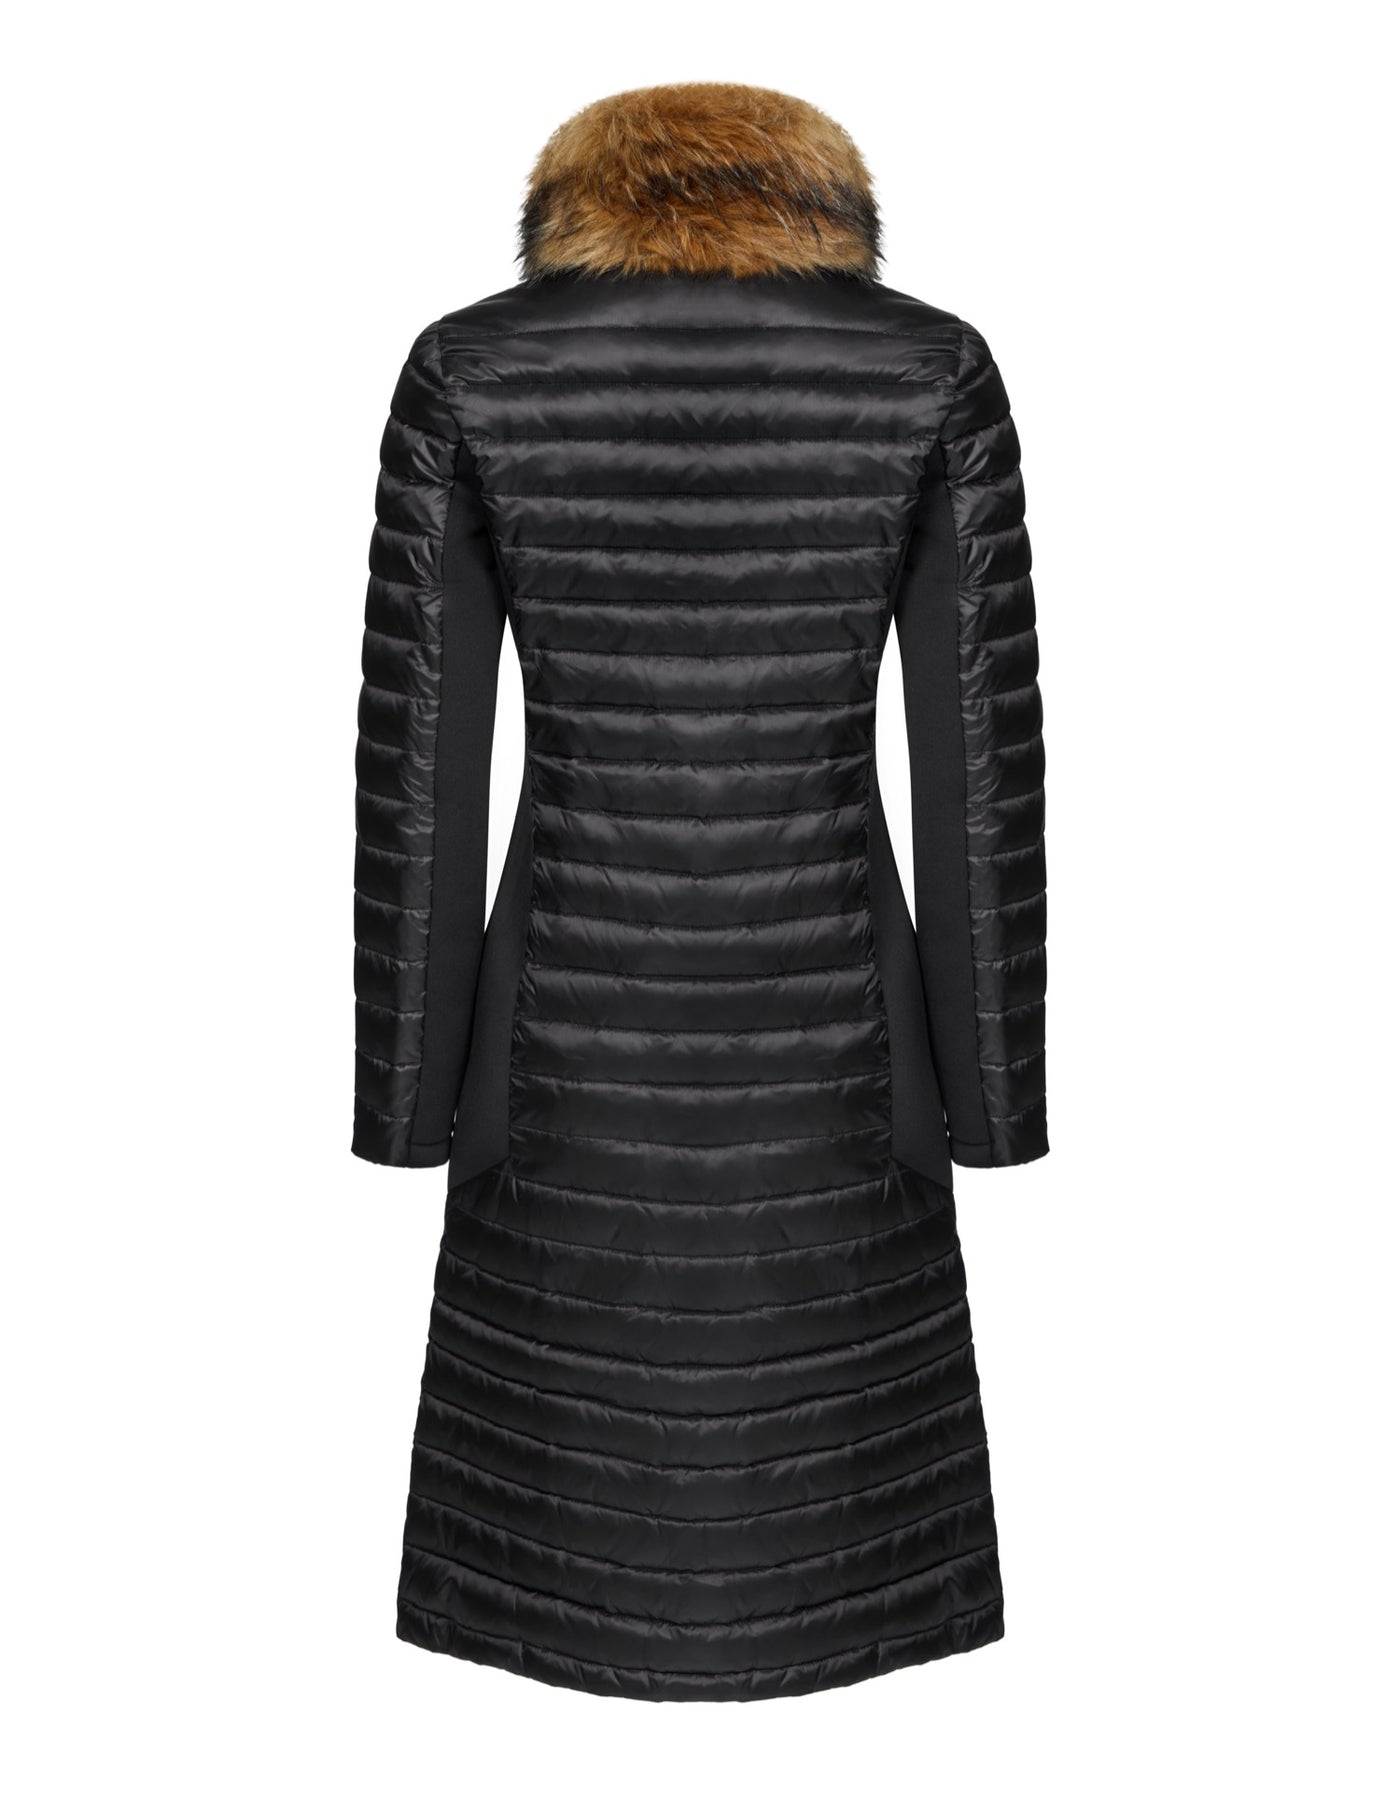 Puffer Coat Black - Luxe Faux Fur Collar - 50% OFF